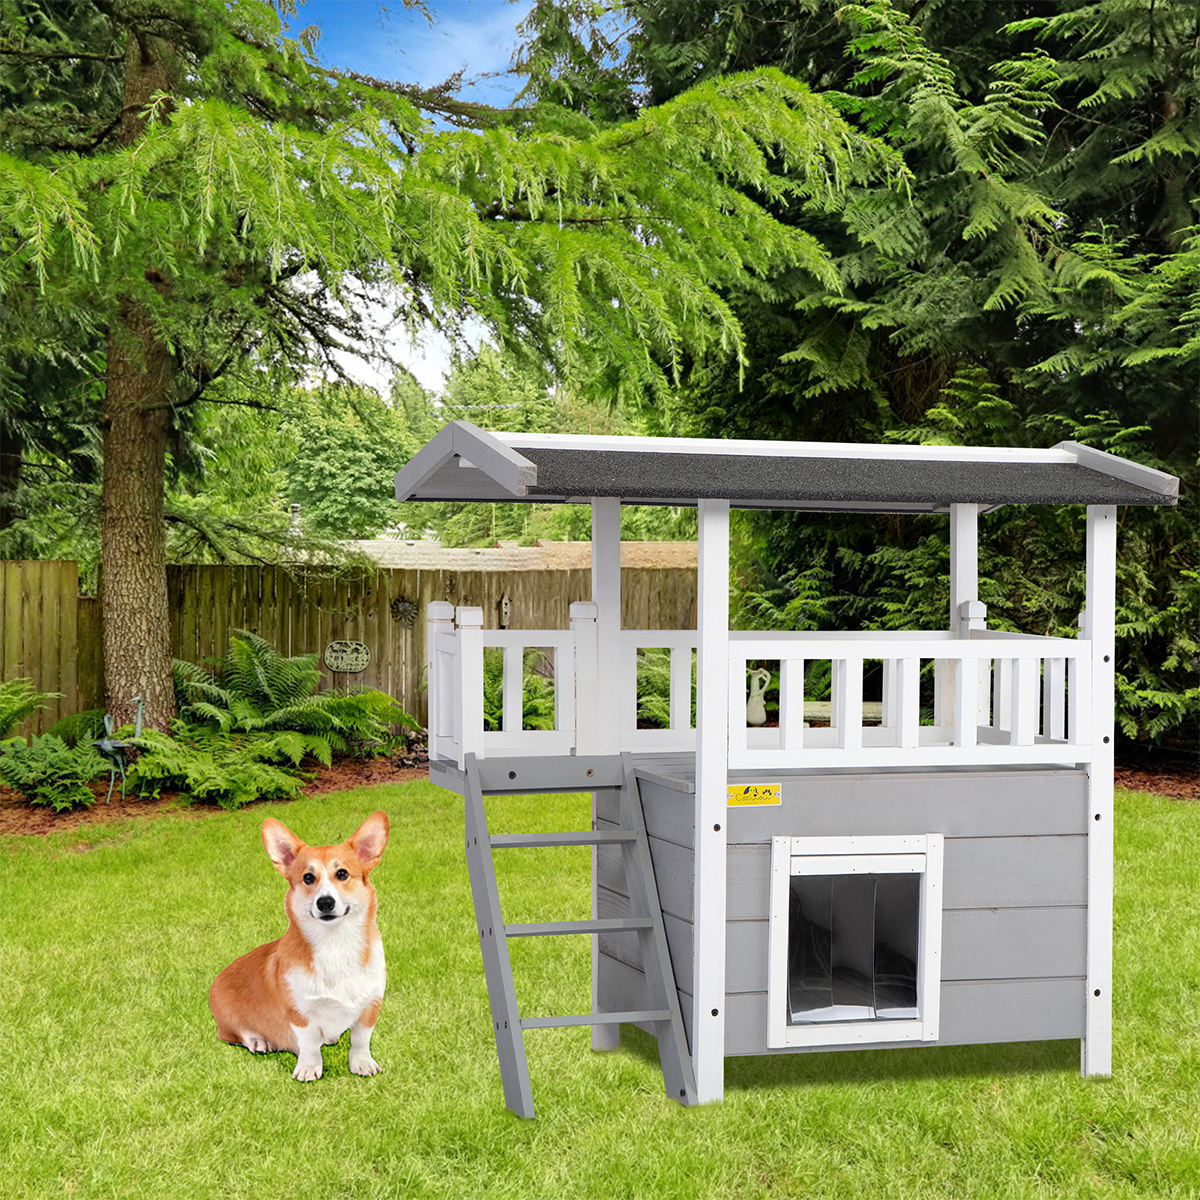 Does My Dog Need a Dog House? 12001 Dog blogs